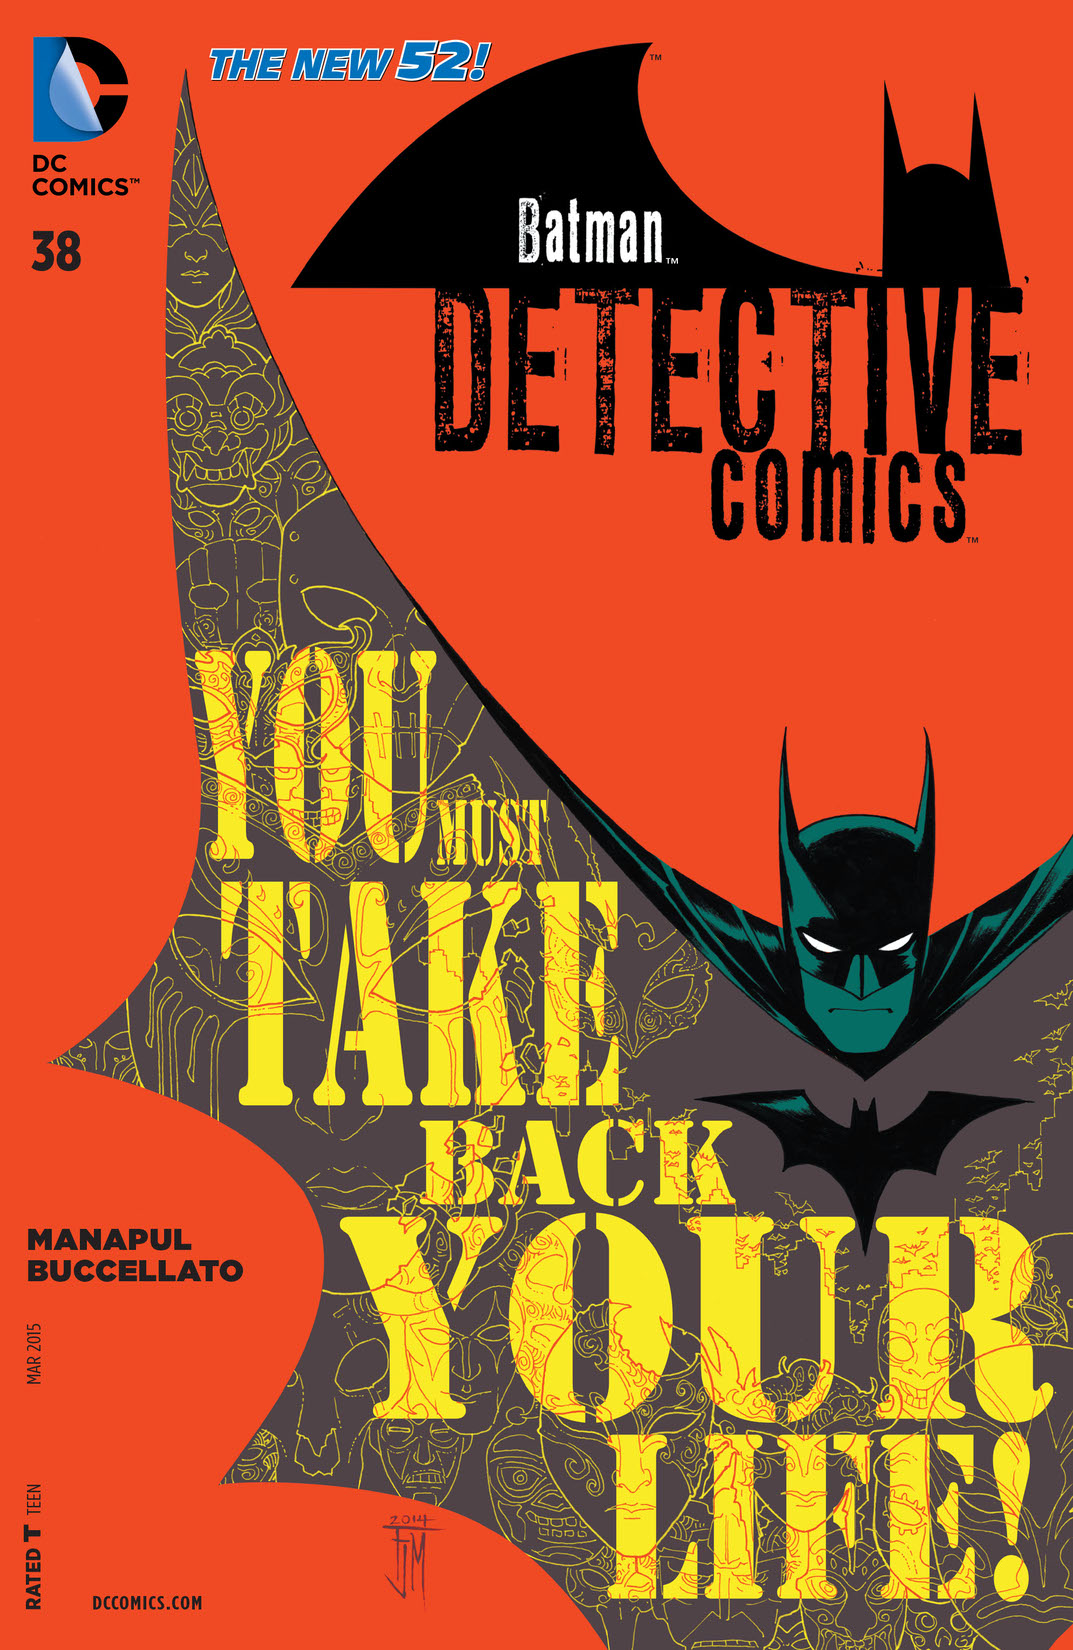 Detective Comics (2011-) #38 preview images